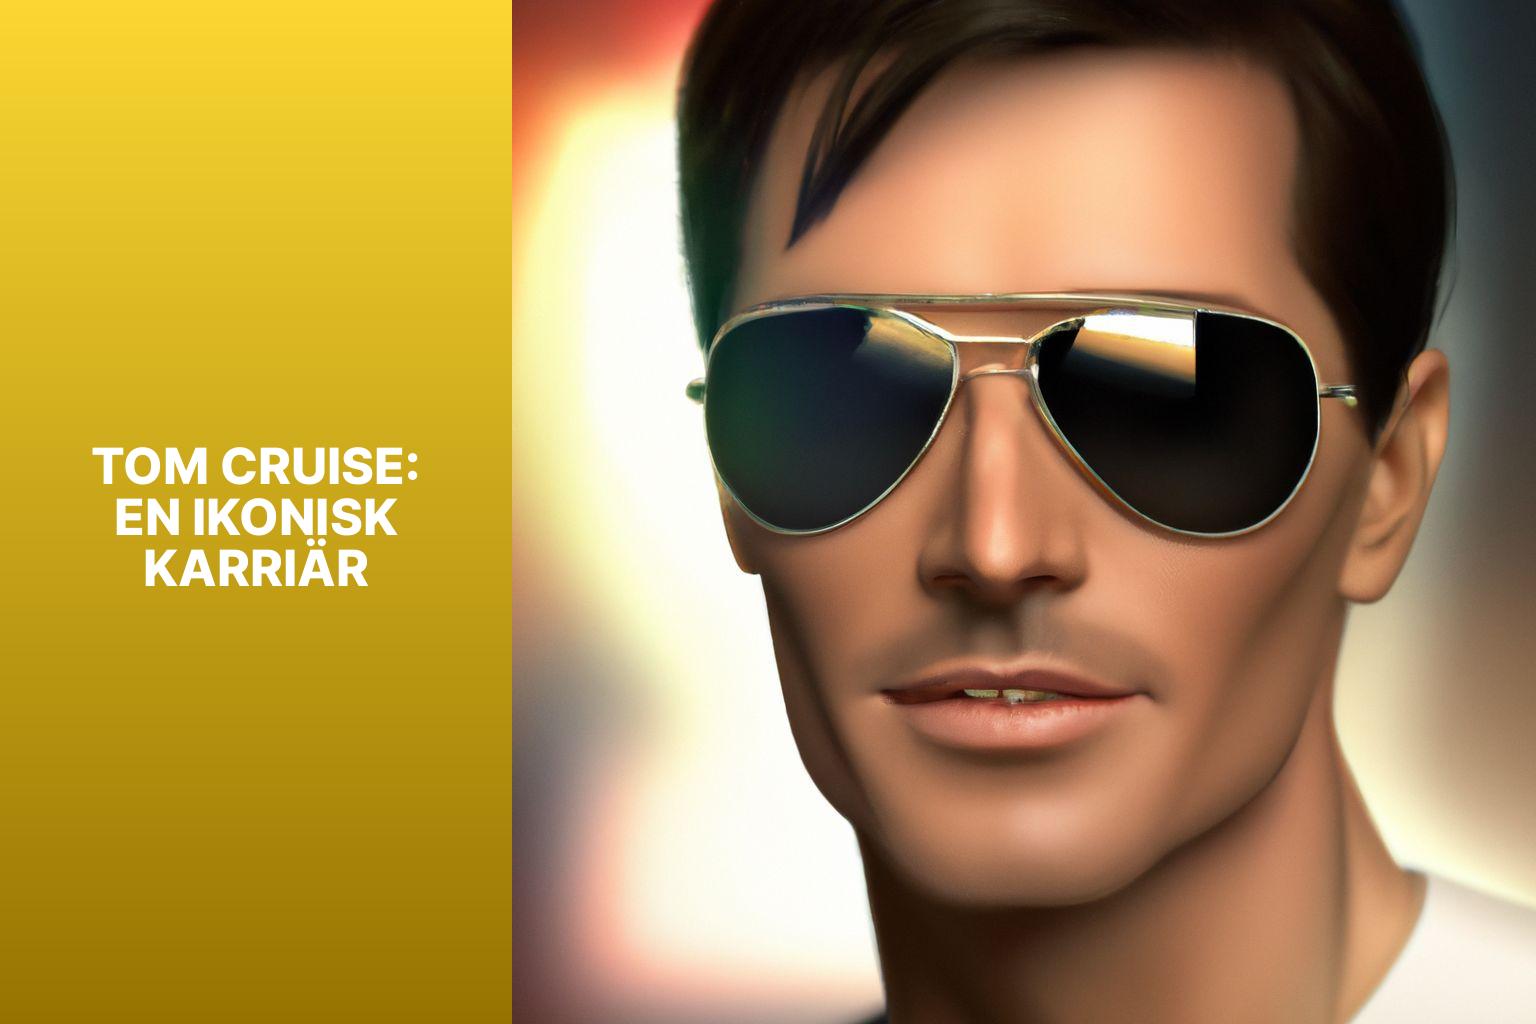 Tom Cruise: En Ikonisk Karriär - Filmer med Tom Cruise: En Resa Genom En Ikonisk Karriär 